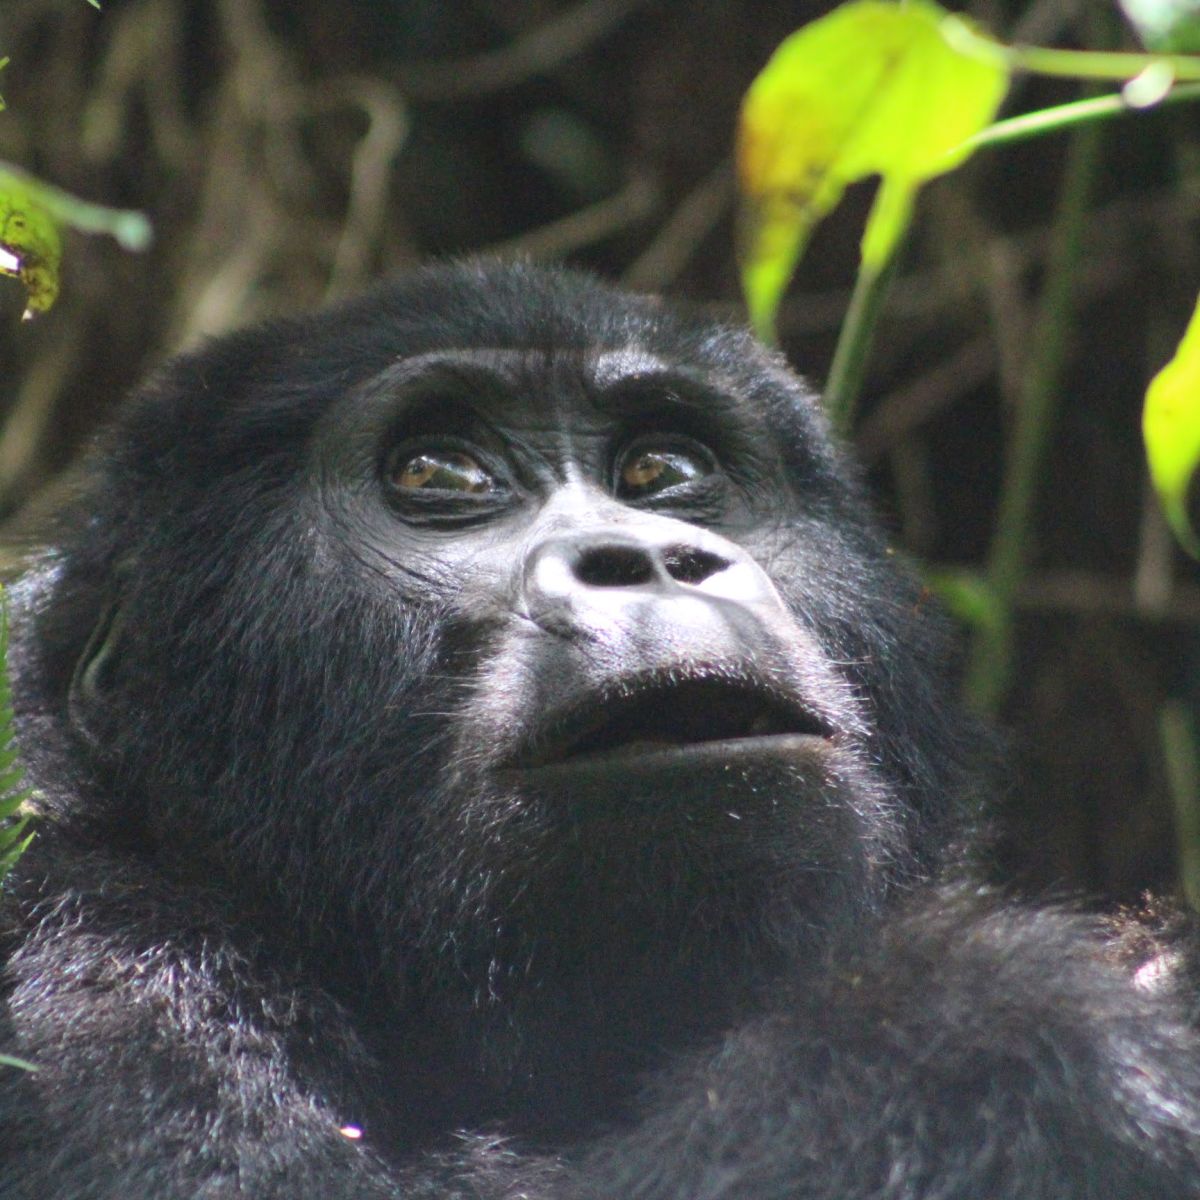 Seraina close up of gorilla